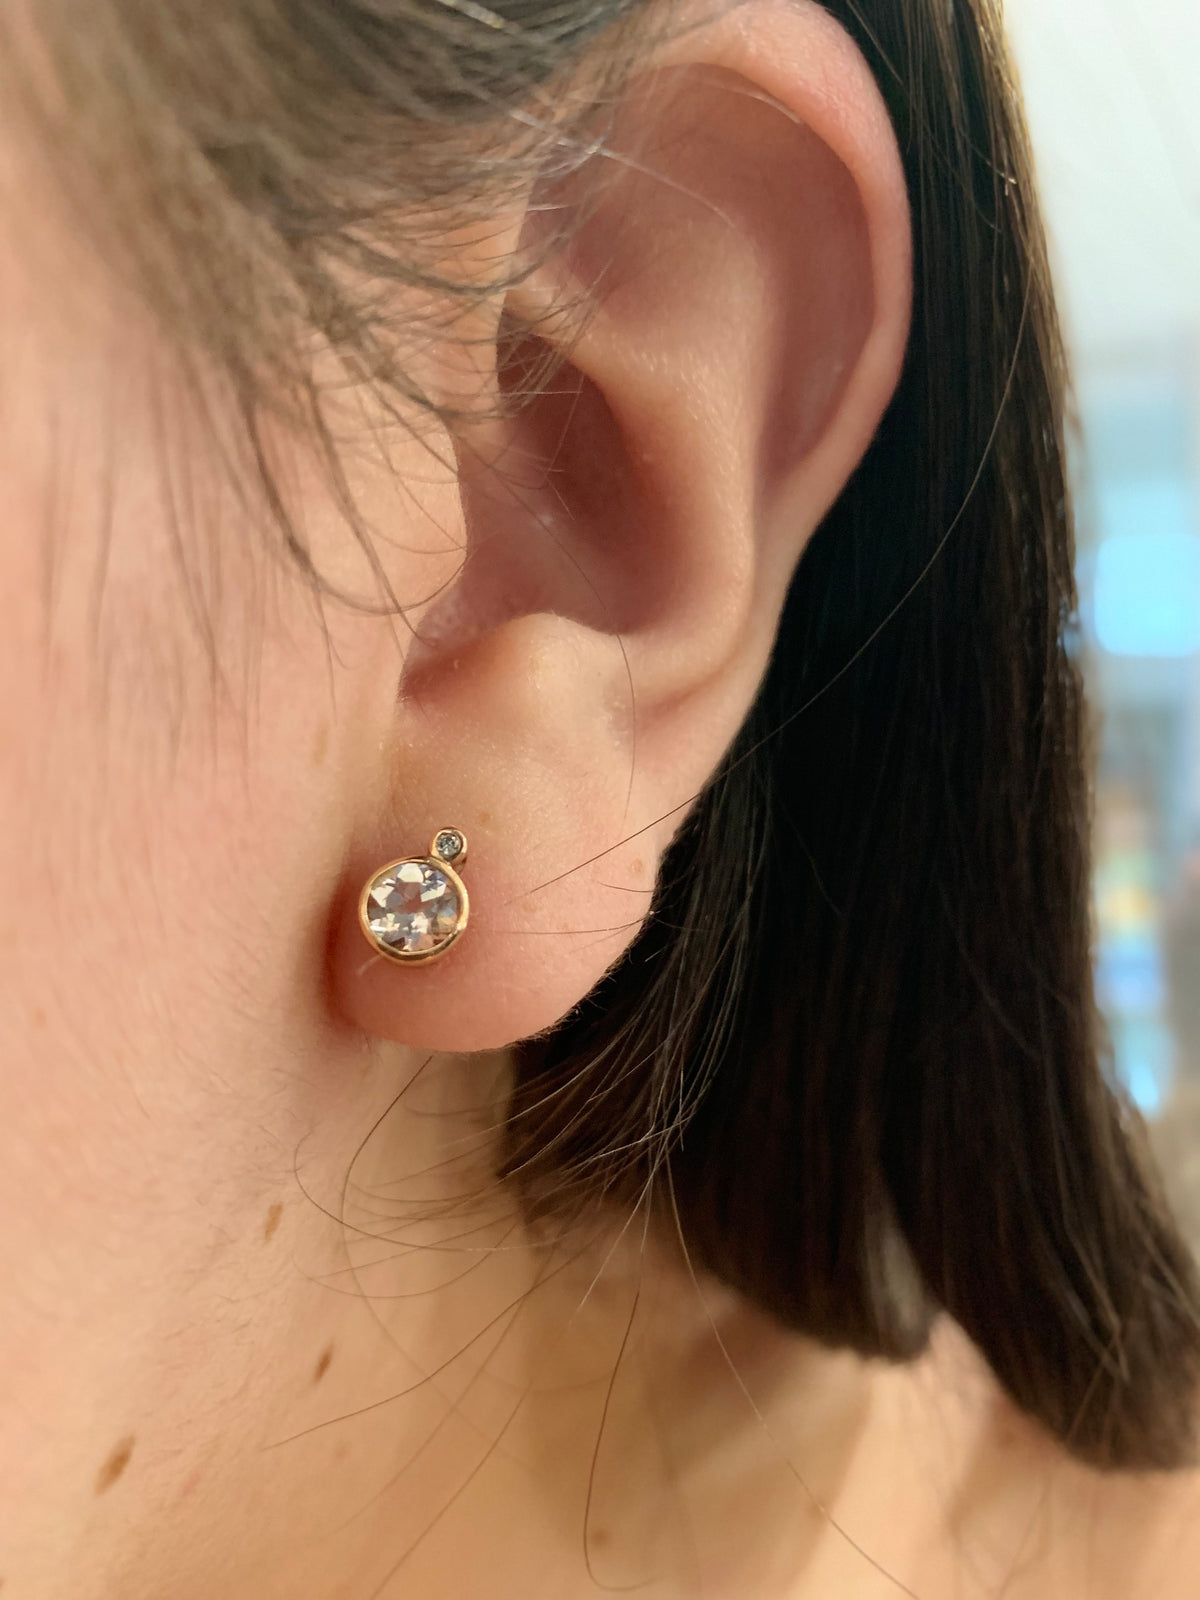 Morganite and Diamond Earrings